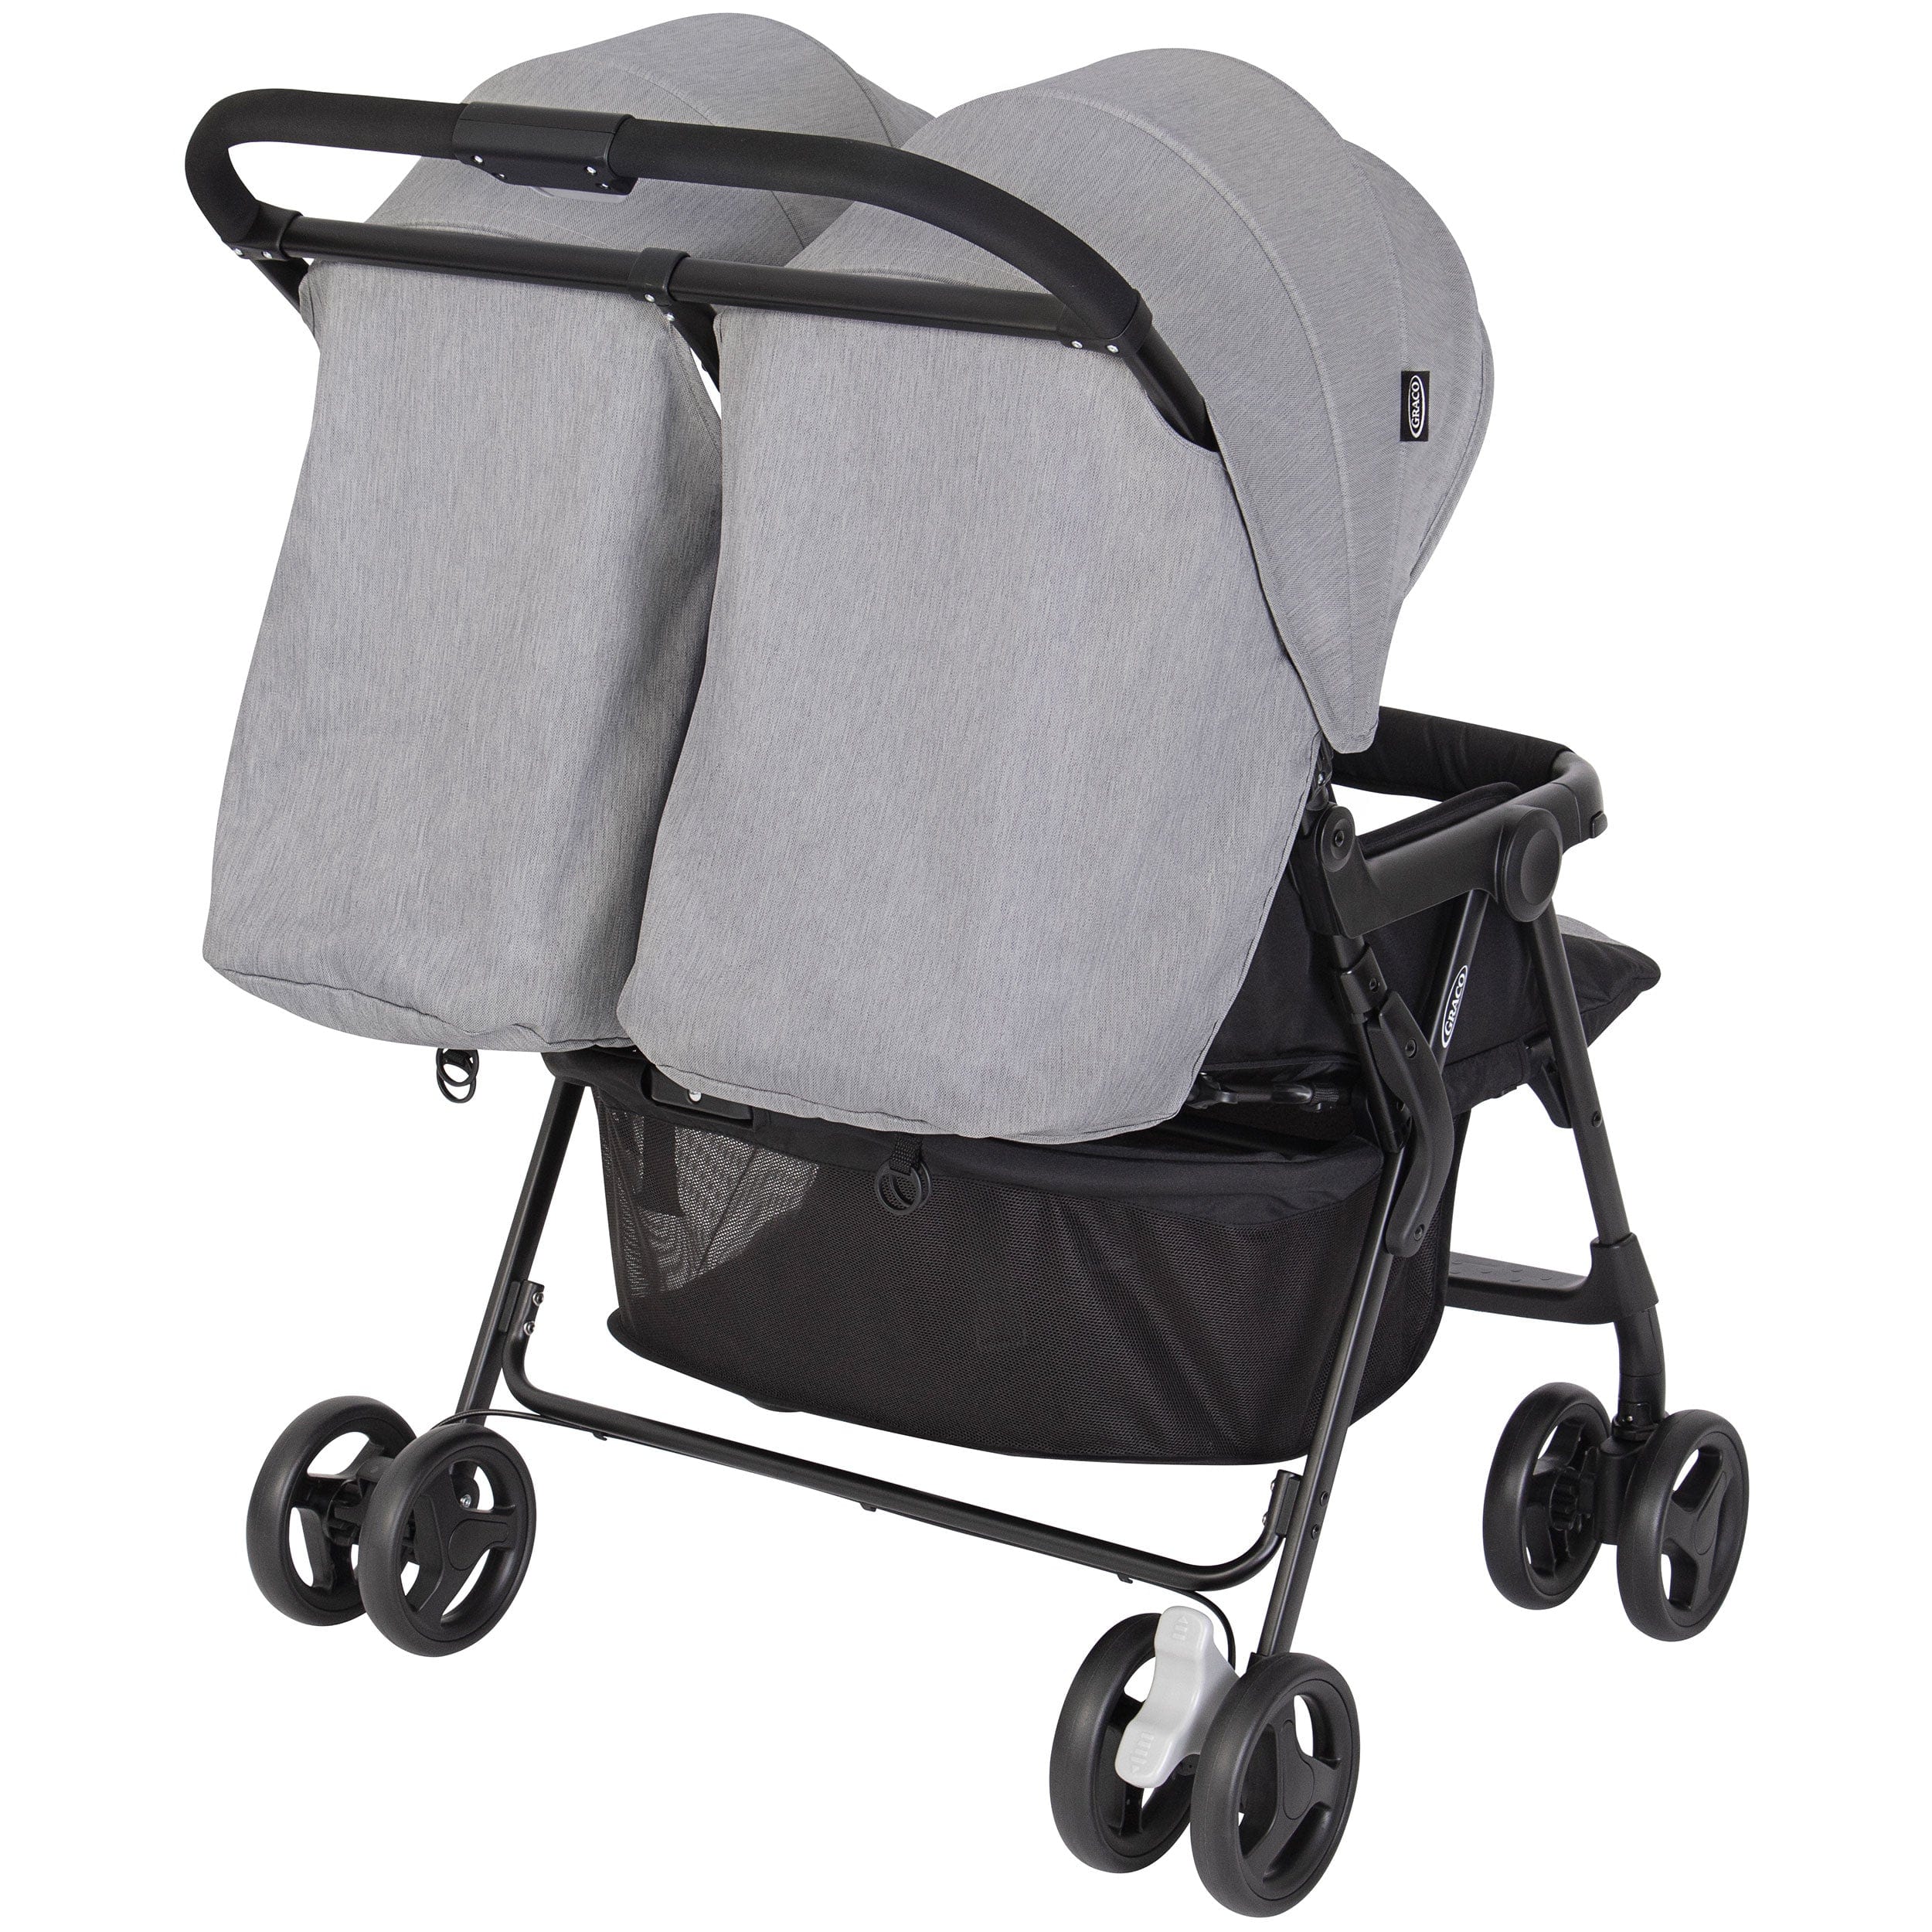 Graco baby pushchairs Graco Duo Rider Stroller in Steeple Grey GS1217AASTG000